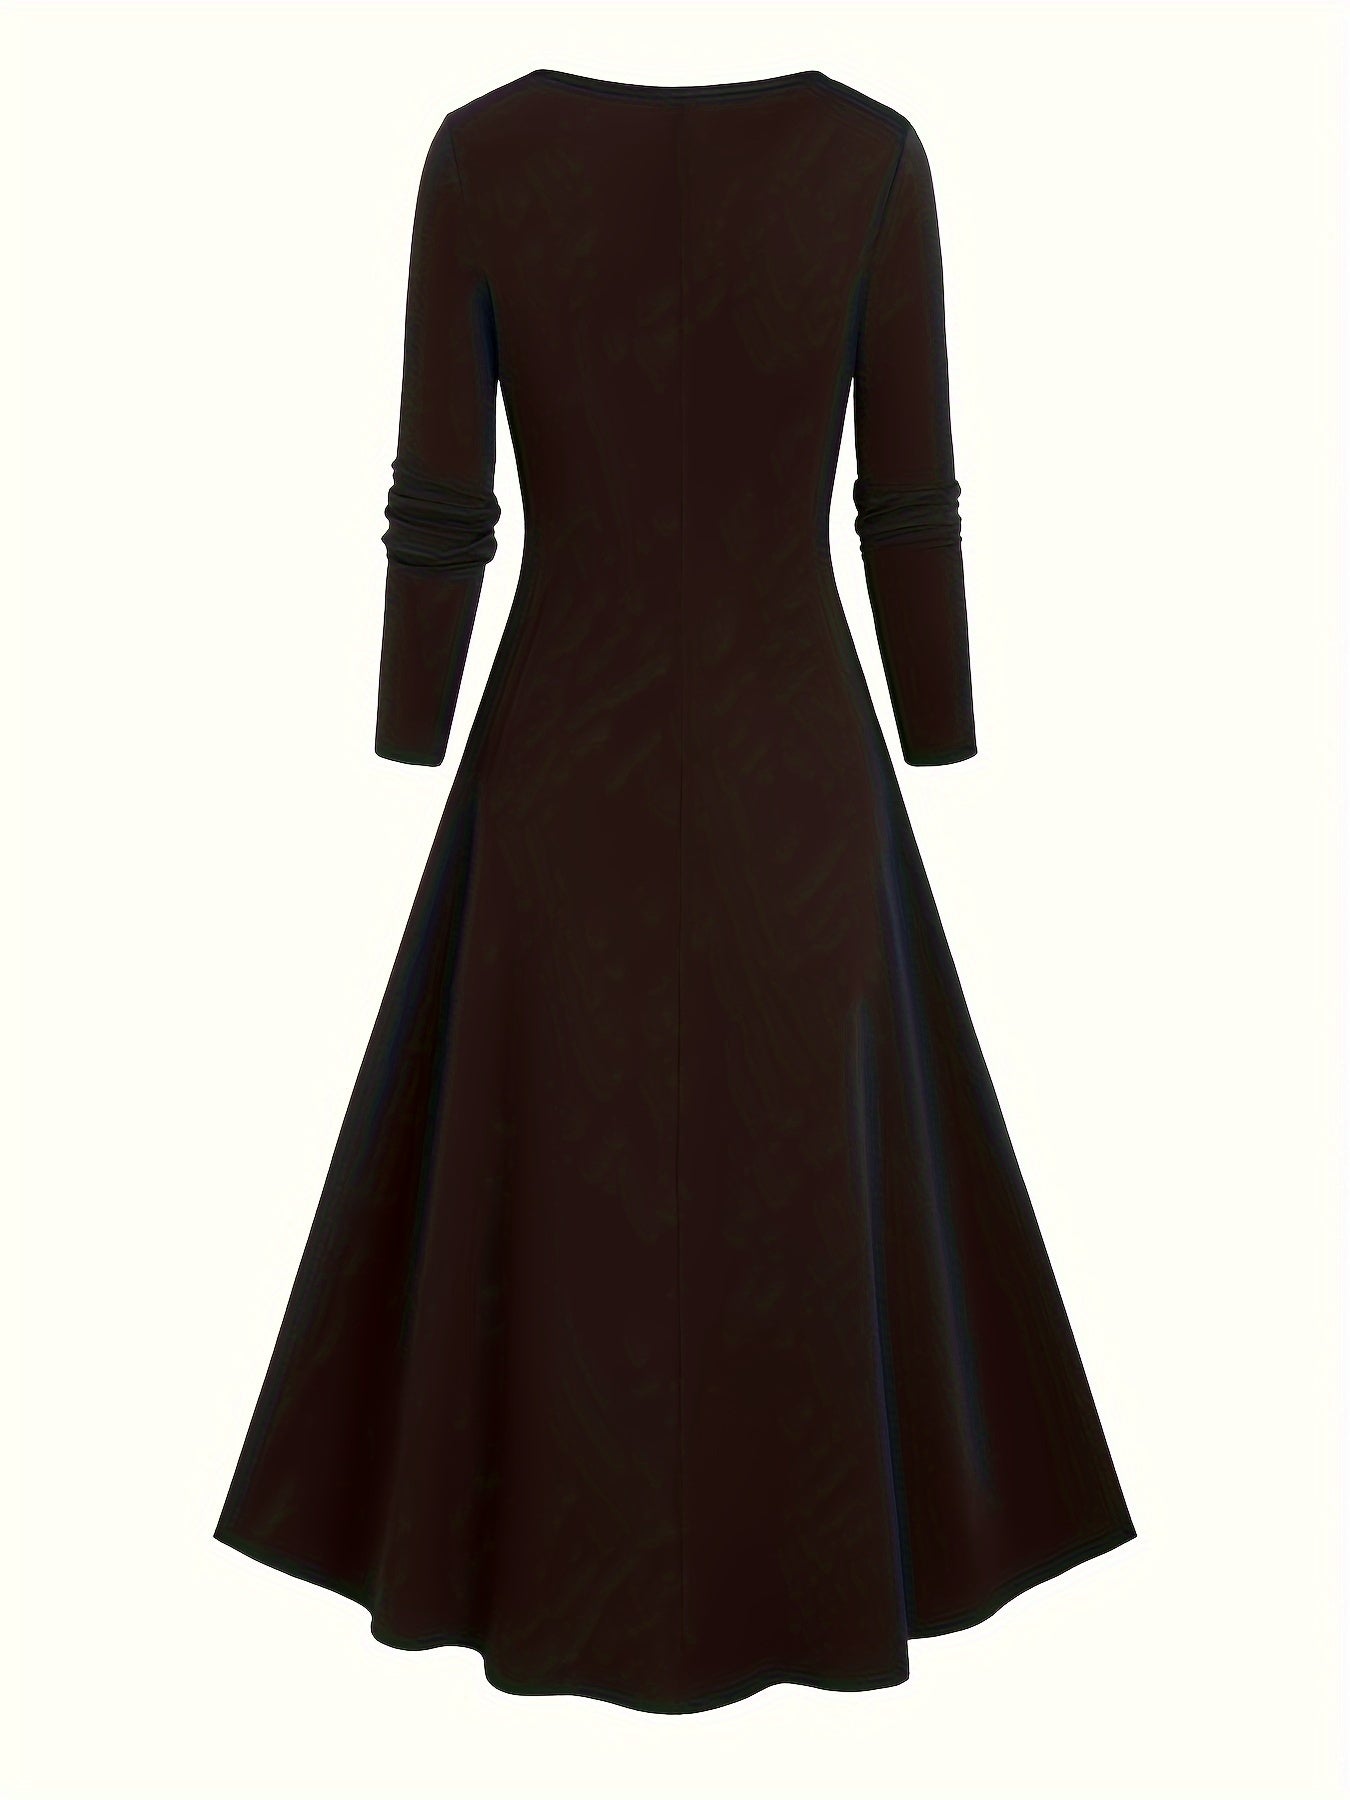 Goth Two-piece Set, Vintage Plaid Pattern Spaghetti Strap Dress & Long Sleeve Tunics Outfits, Women's Clothing